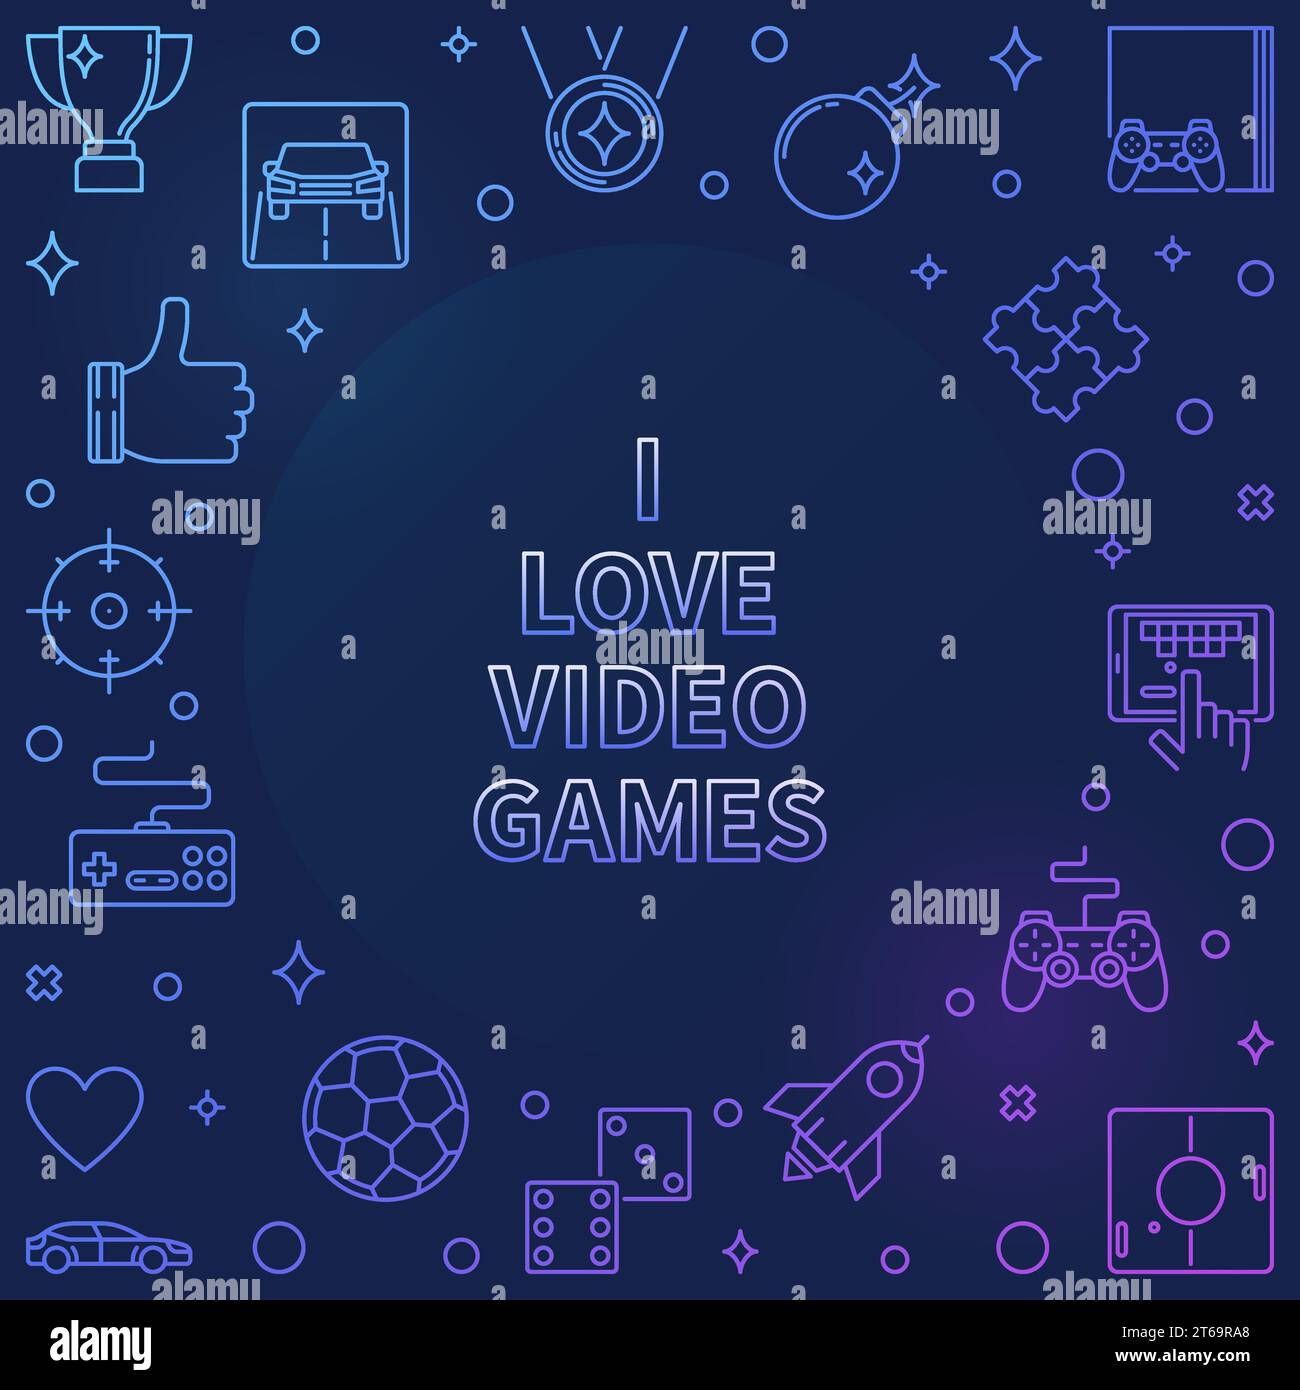 I Love Video Games linear colored frame - vector Game concept outline illustration on dark background Stock Vector